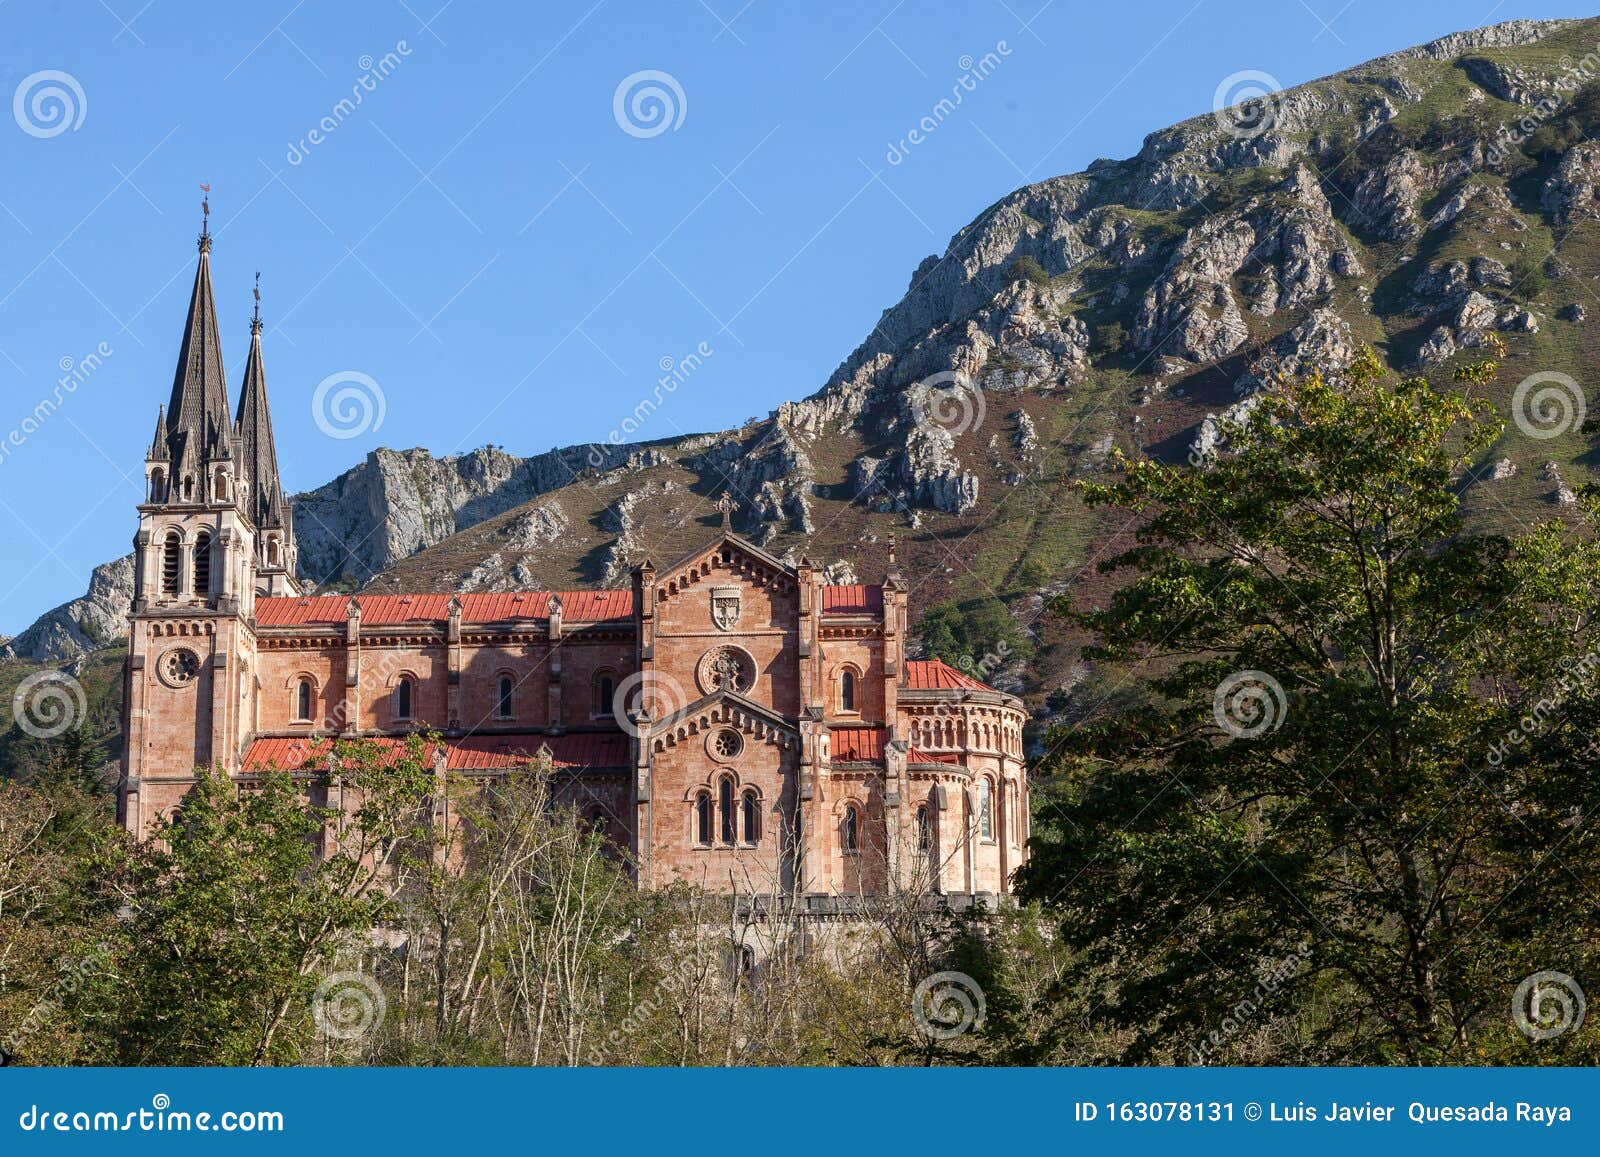 covadonga church next to the mountain